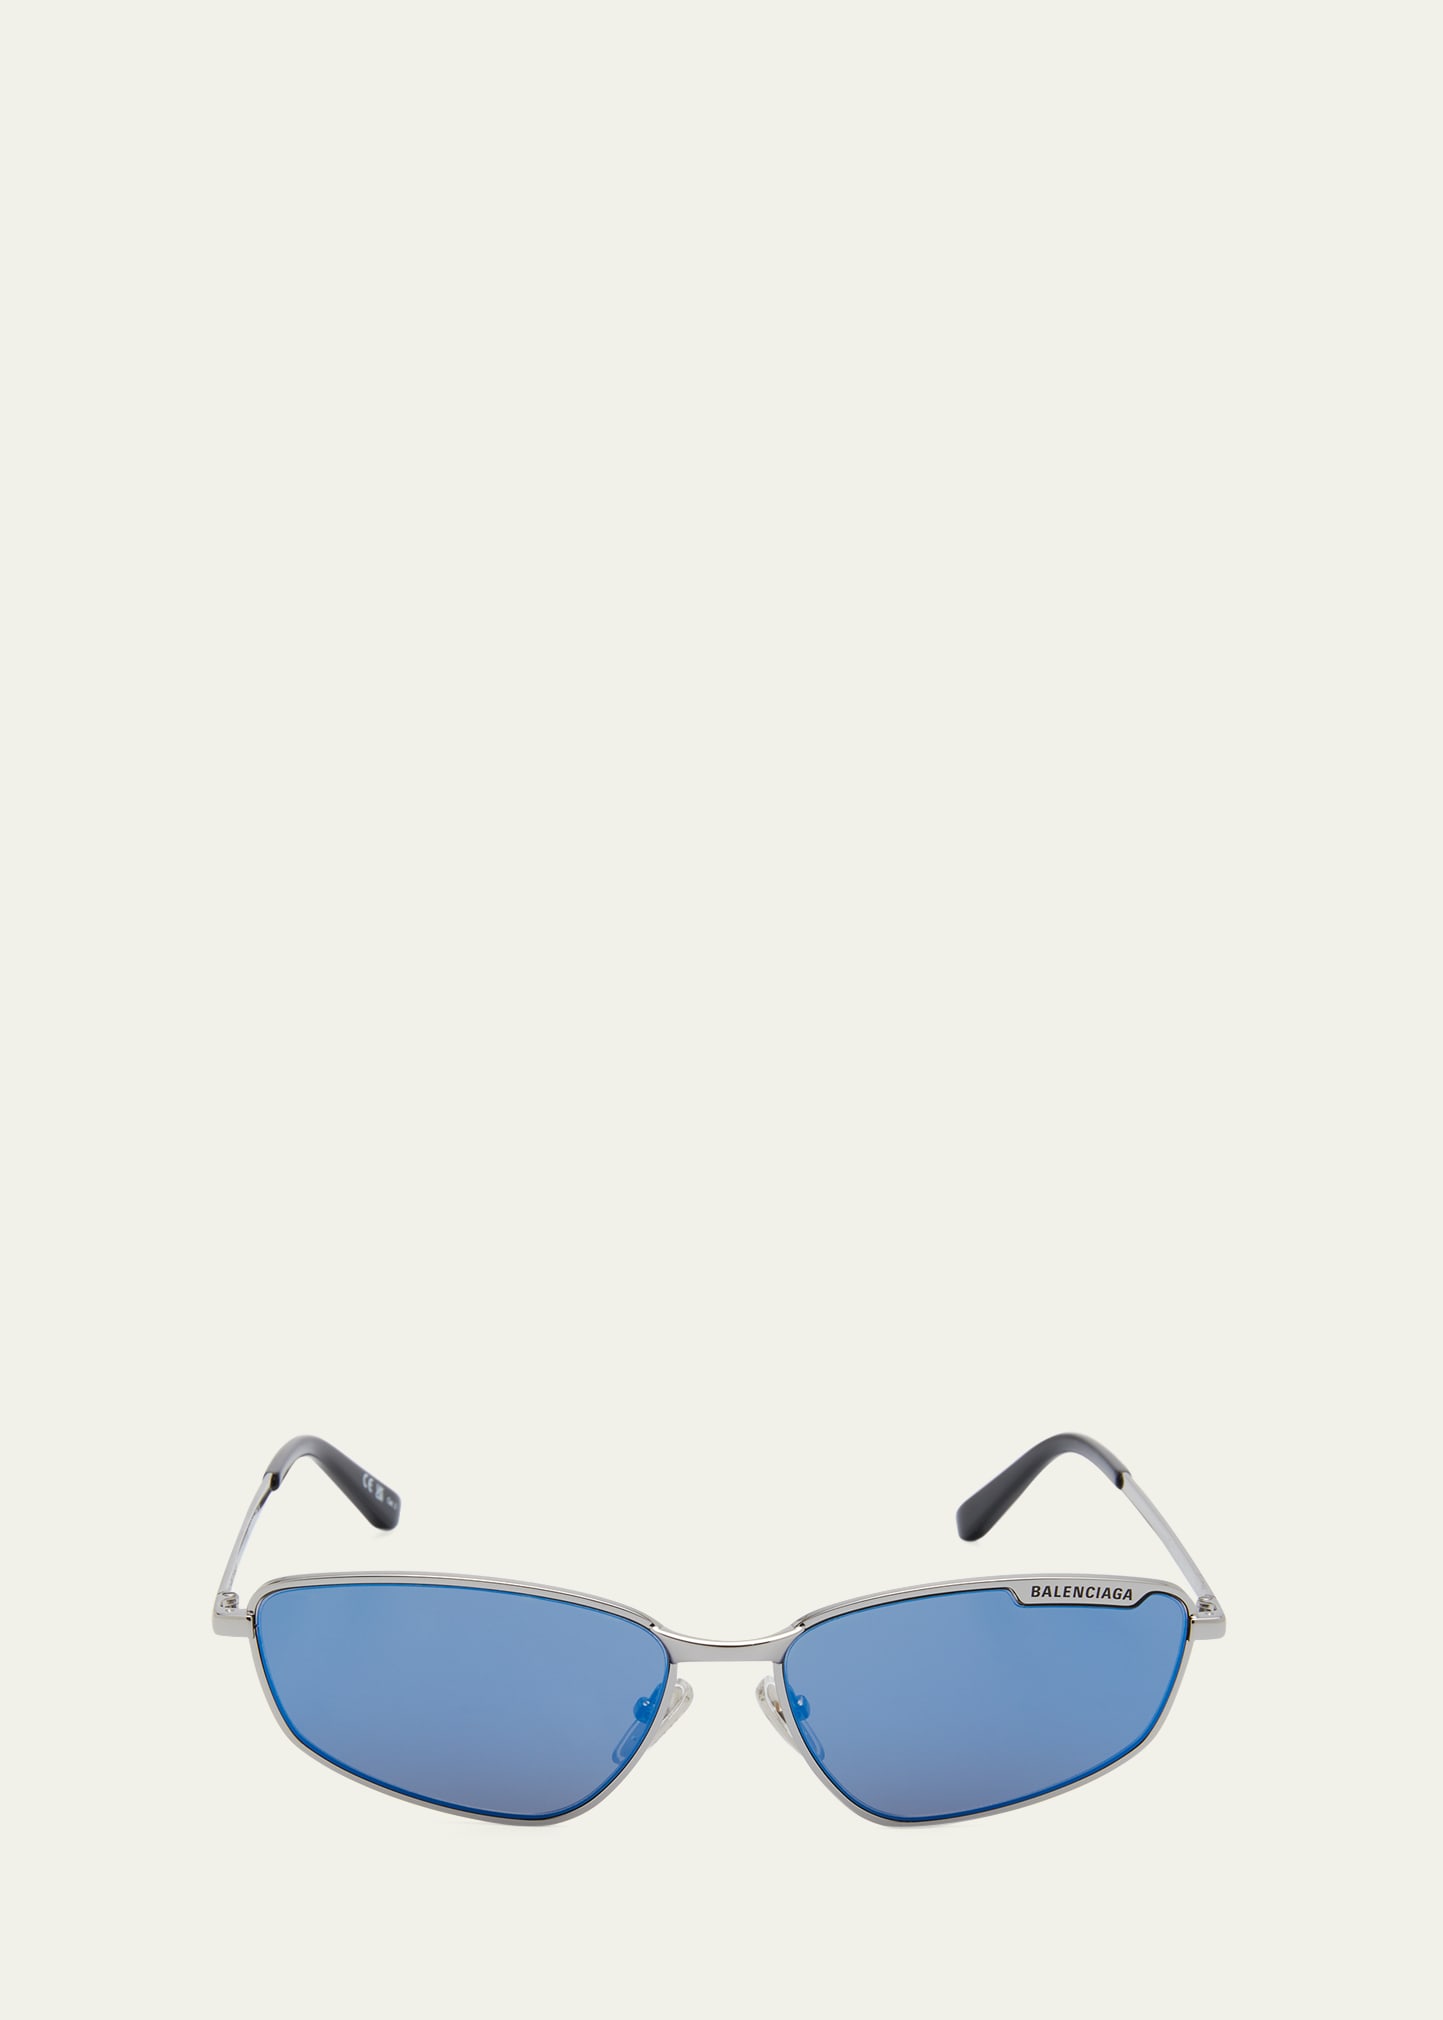 ubemandede uendelig ironi Balenciaga Men's Metal Cat-Eye Sunglasses with Logo - Bergdorf Goodman